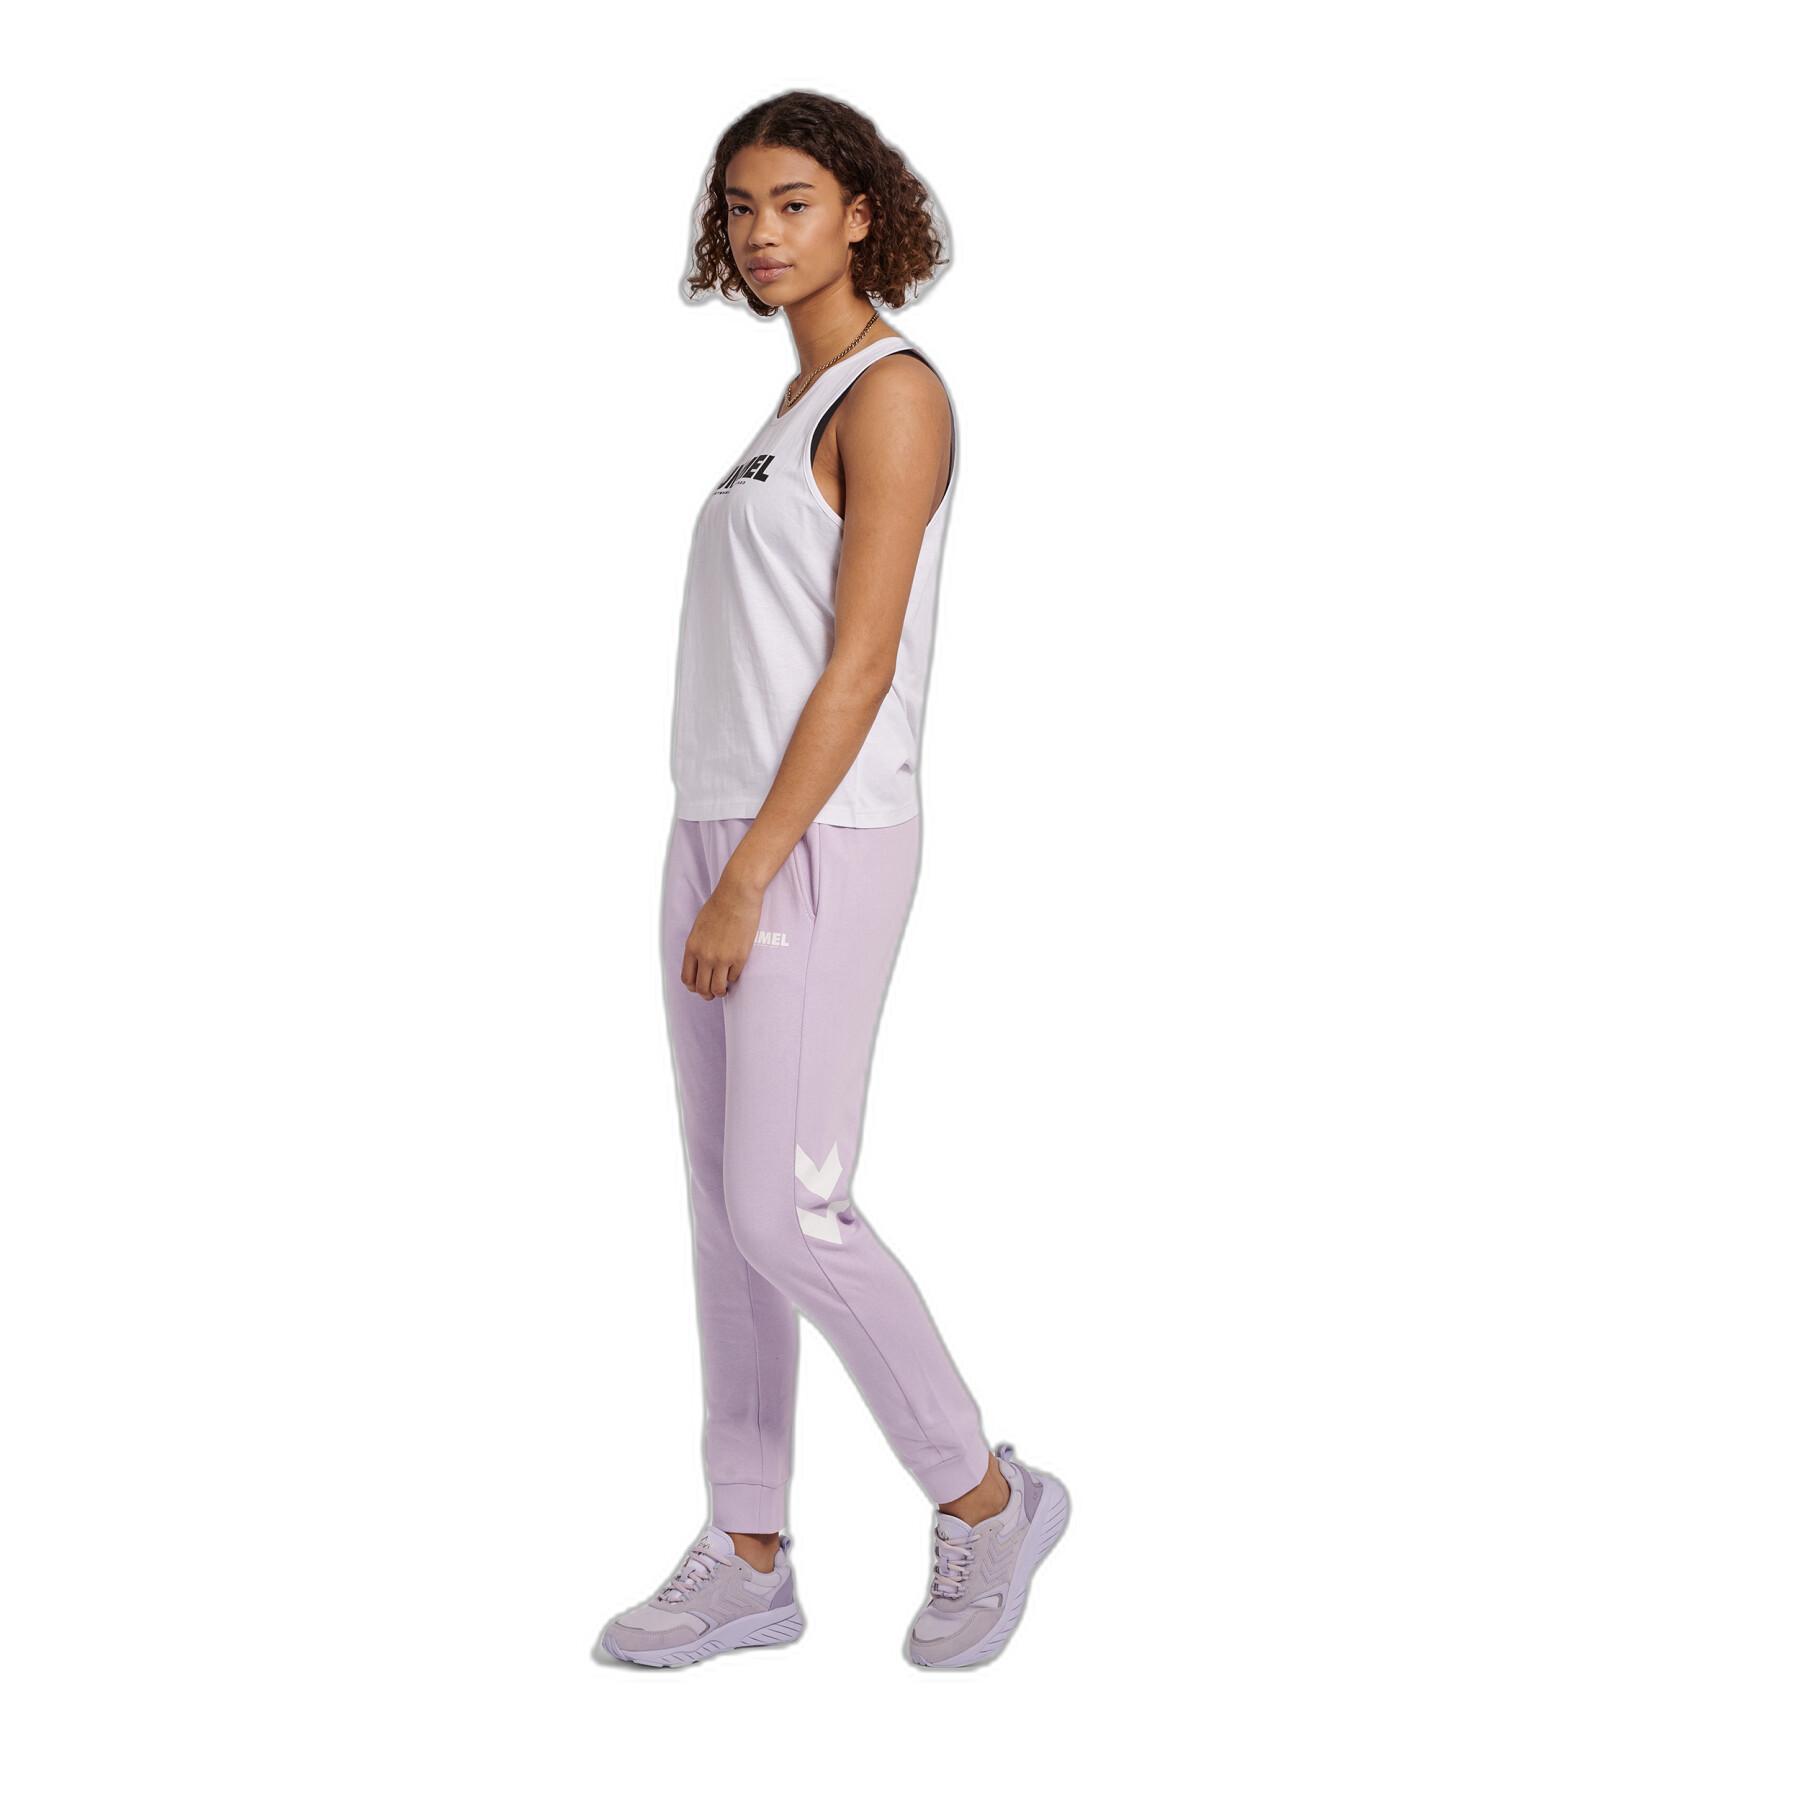 Women's tapered jogging suit Hummel Legacy